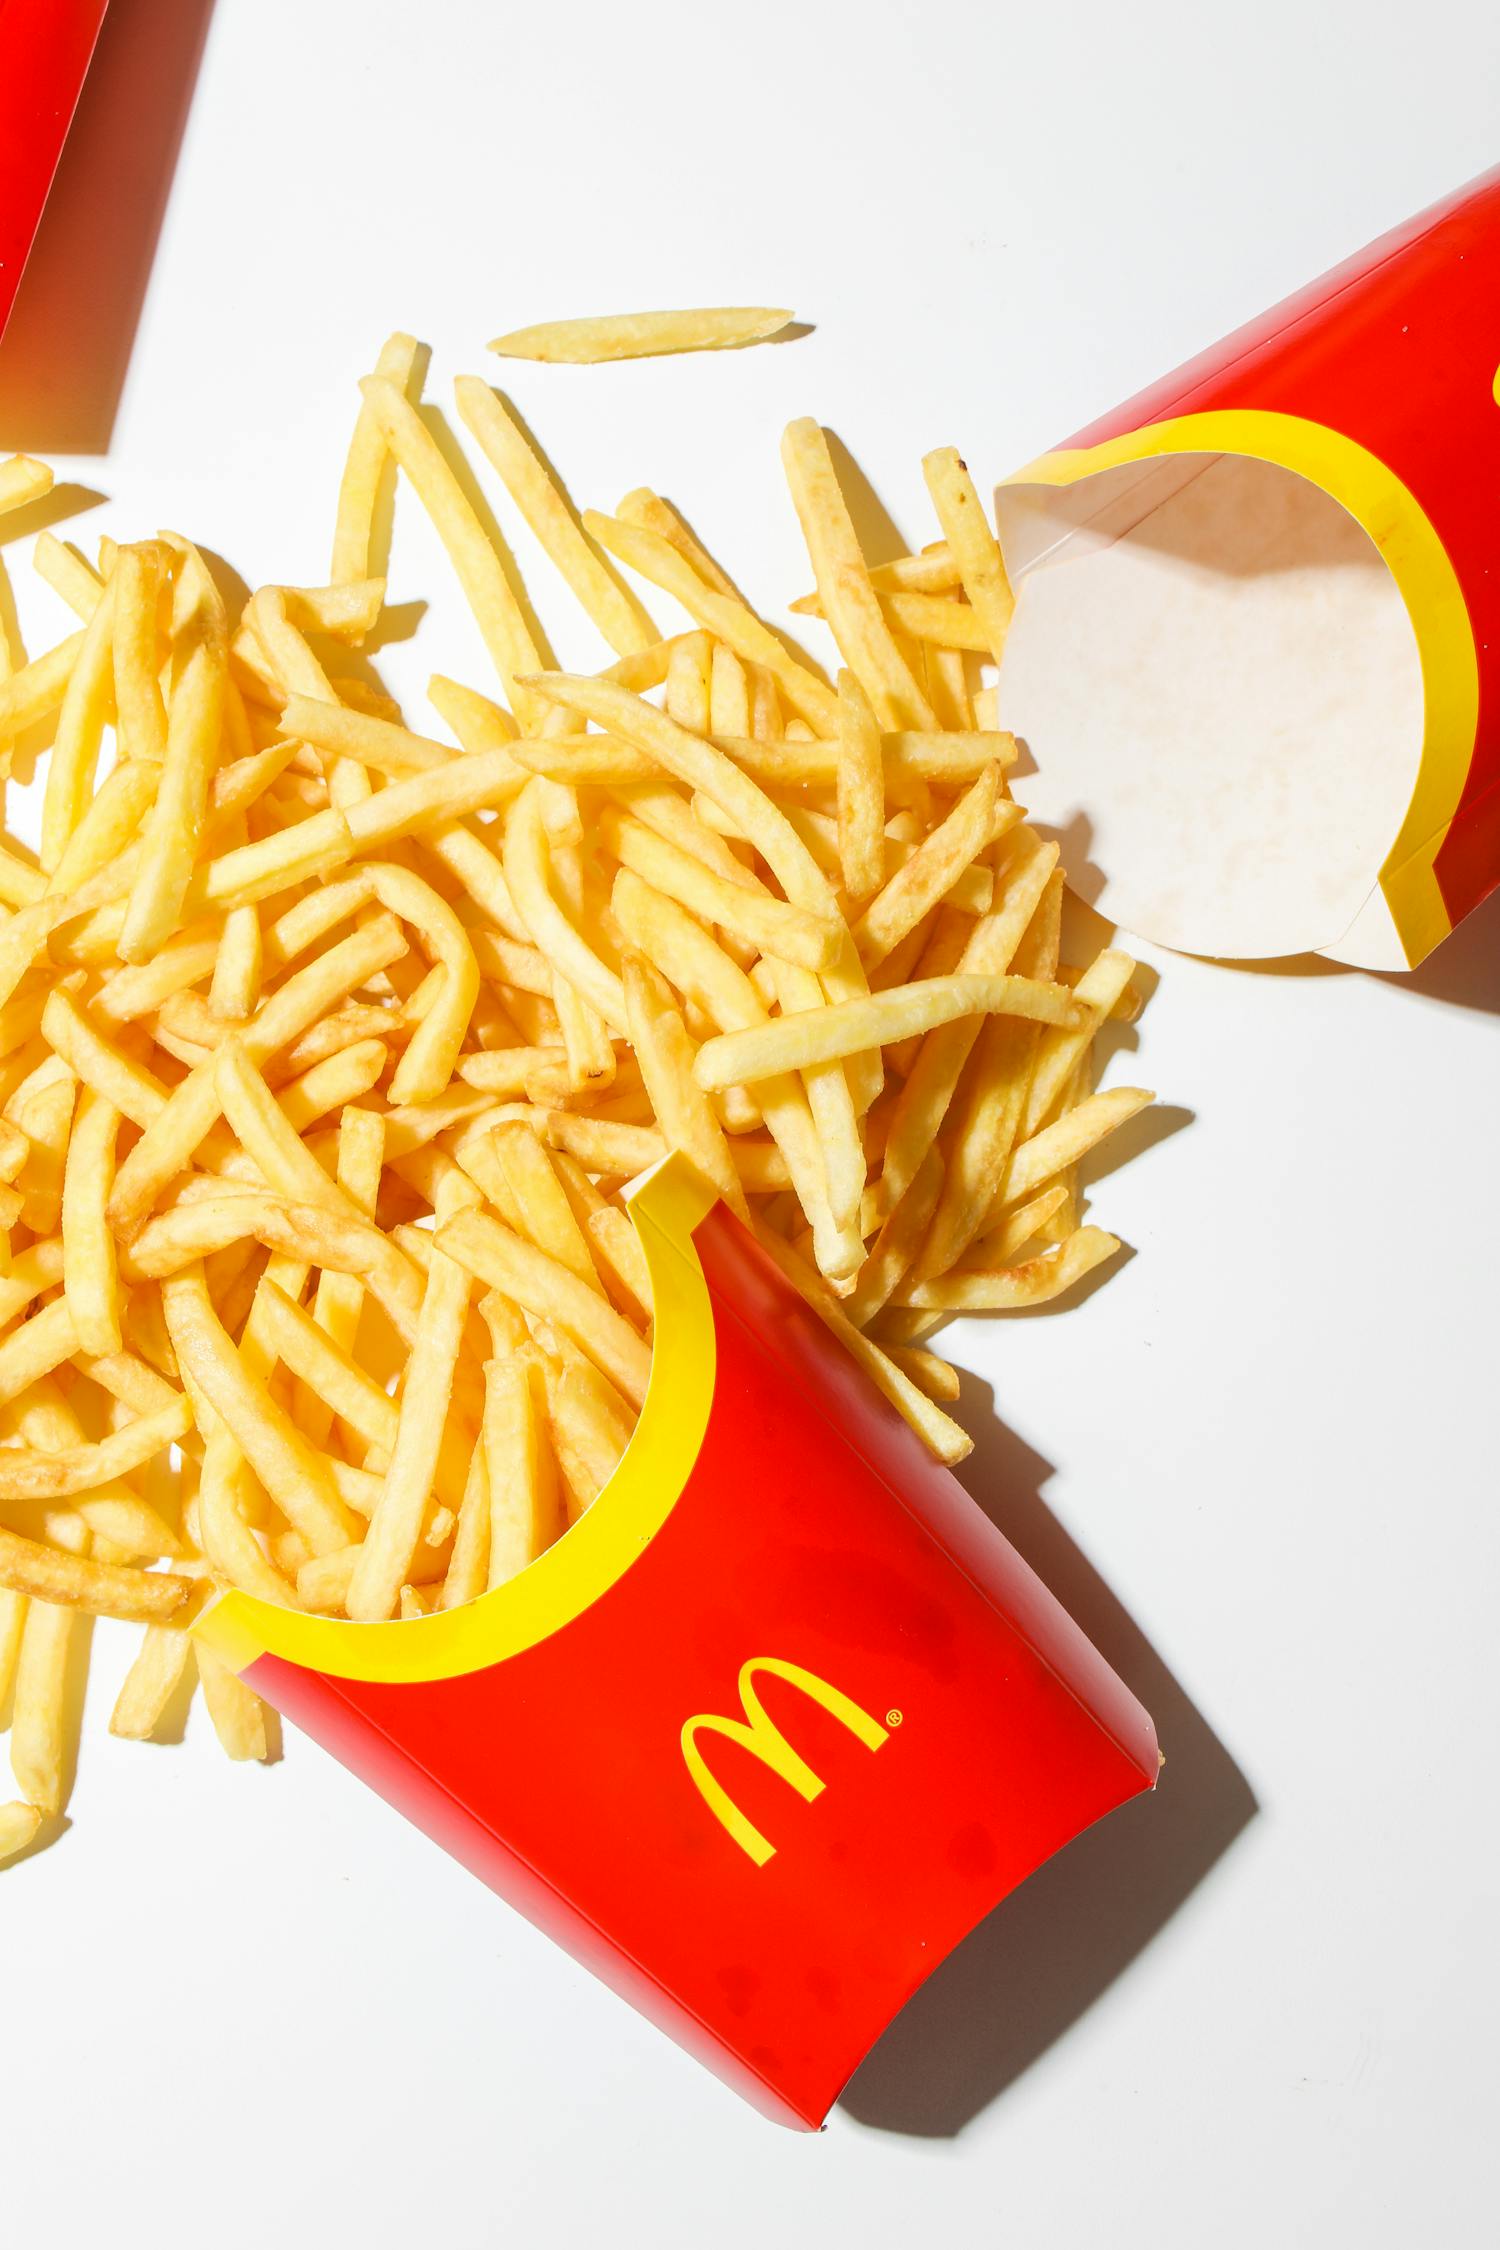 Mcdonalds Fries on White Table · Free Stock Photo